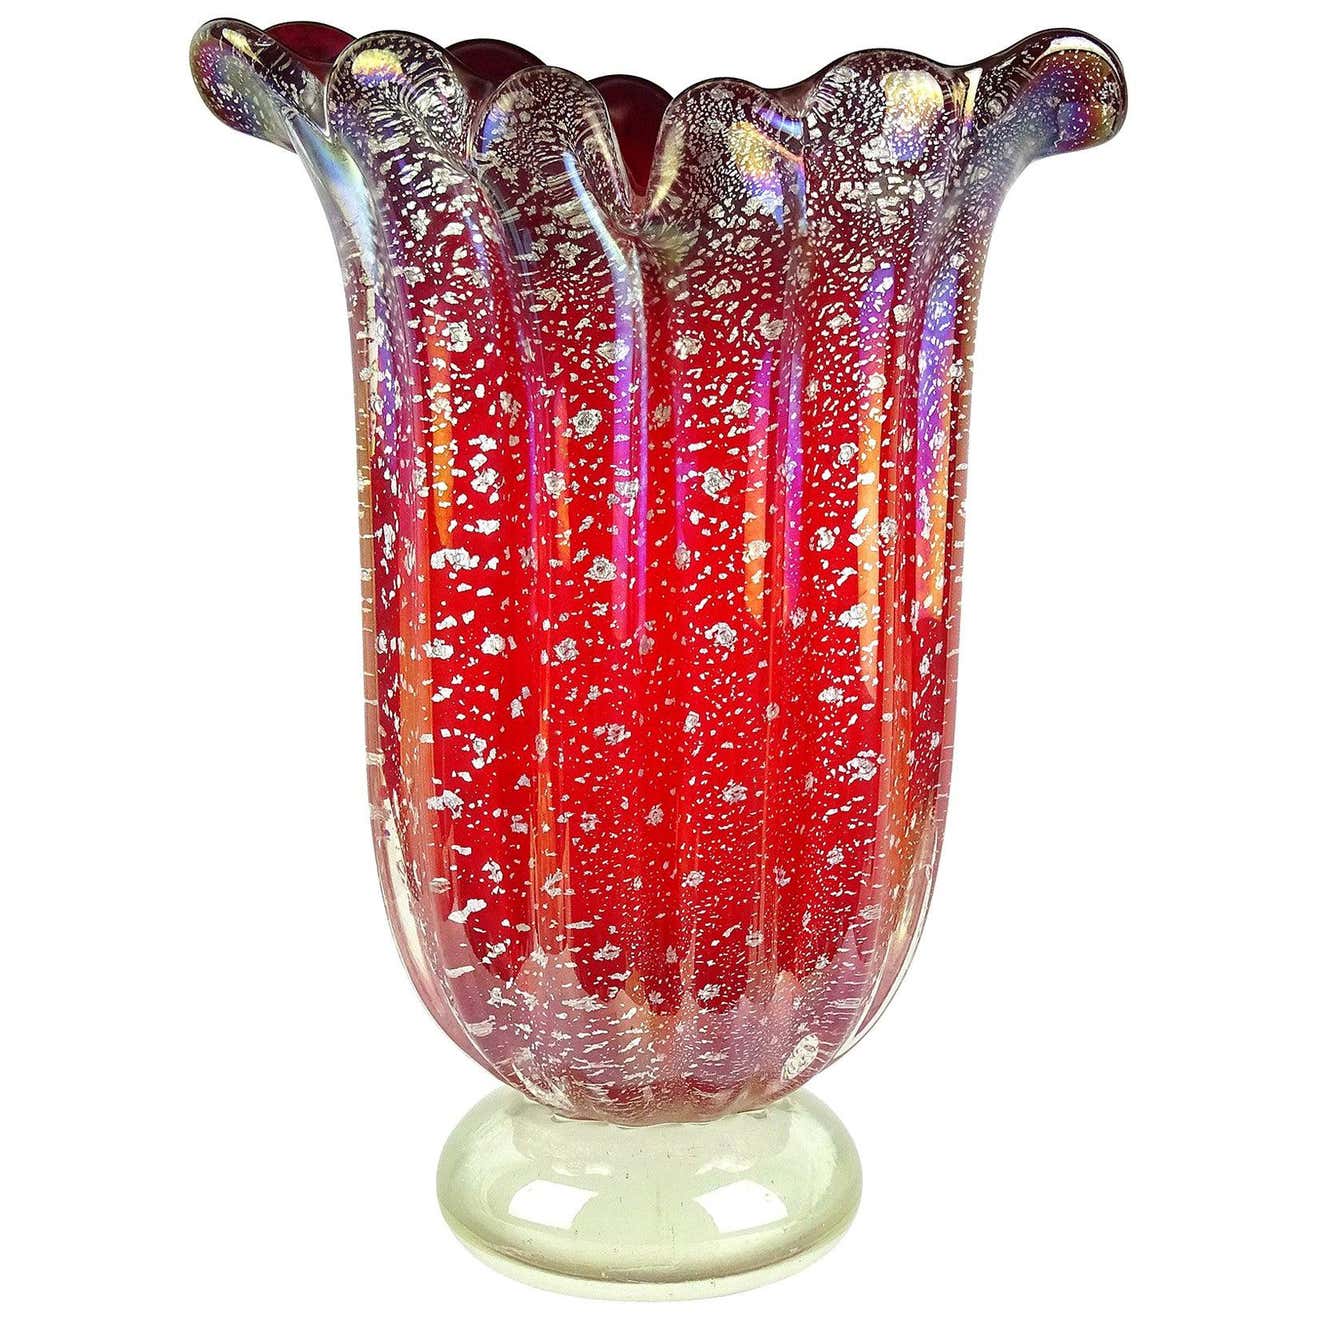 Barovier Toso Murano Red Iridescent Silver Flecks Italian Art Glass Flower Vase For Sale At 1stdibs